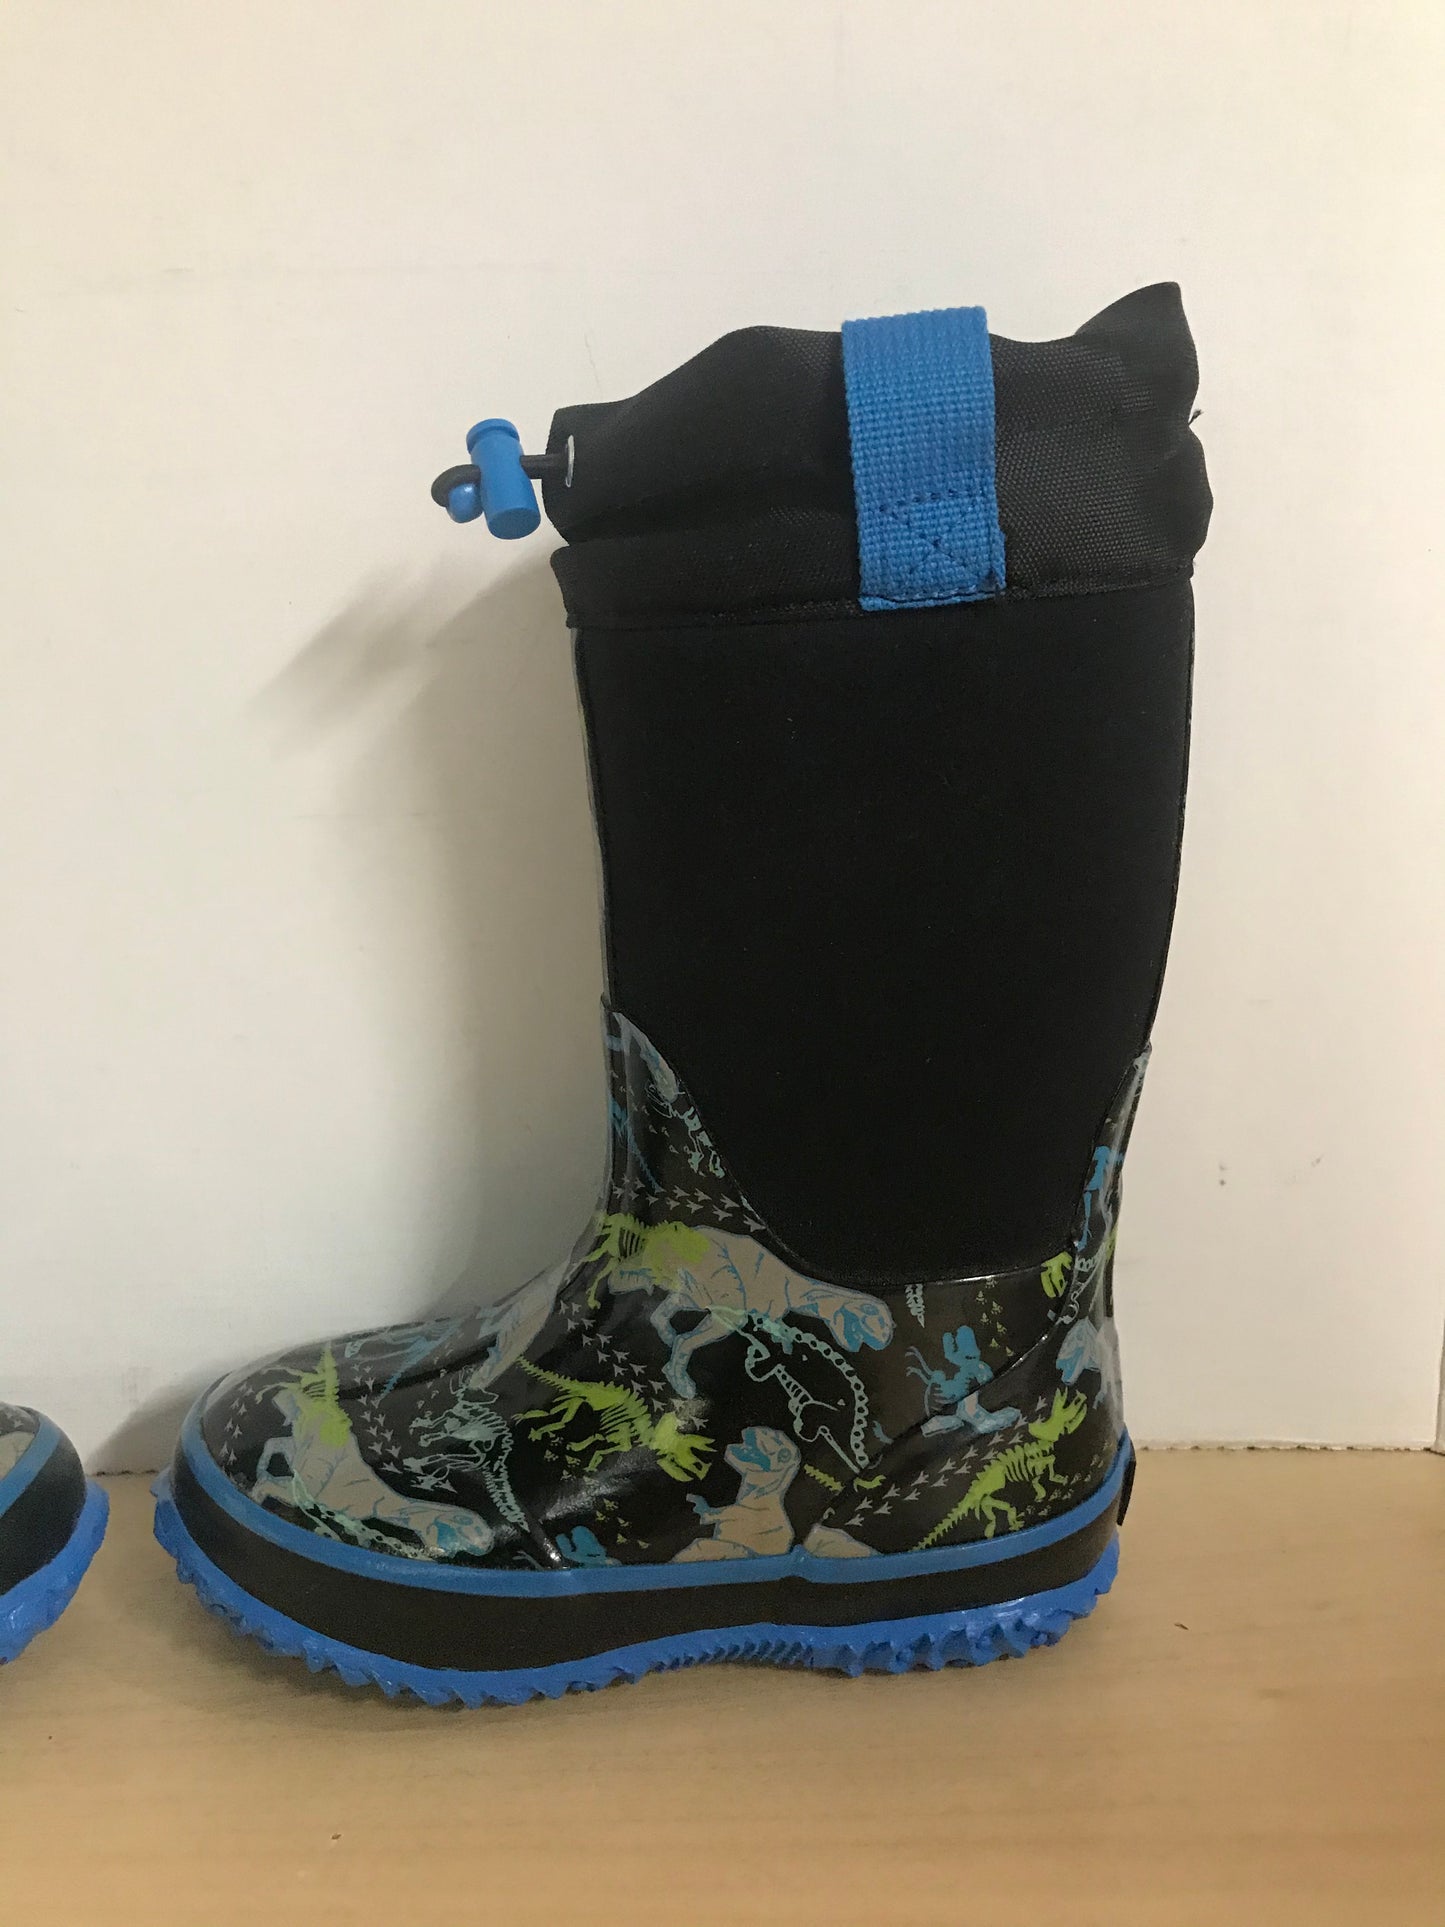 Bogs Style Child Size 11 Cougar Black Blue Dinosaurs Neoprene Rubber Rain Winter Snow Waterproof Boots New Demo Model